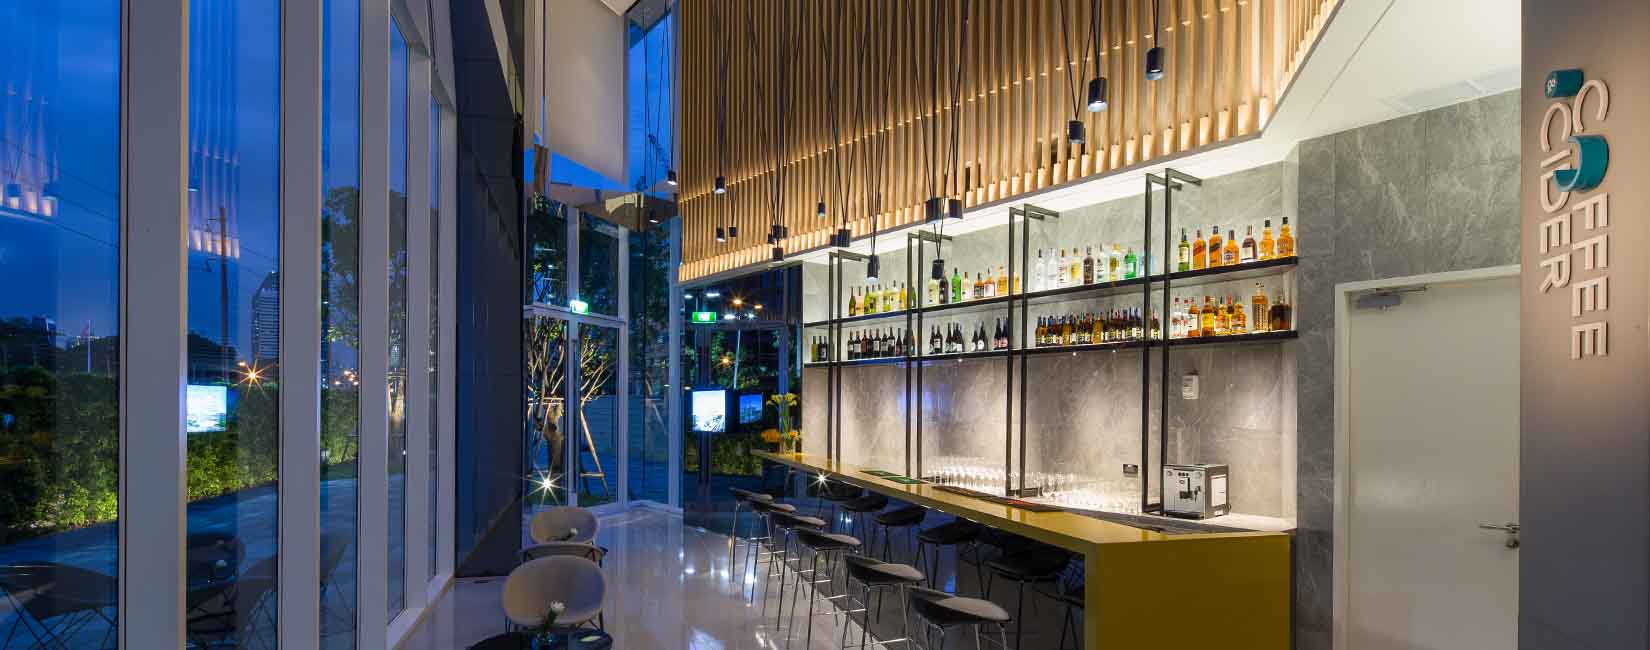 Bangkok restaurant and bar